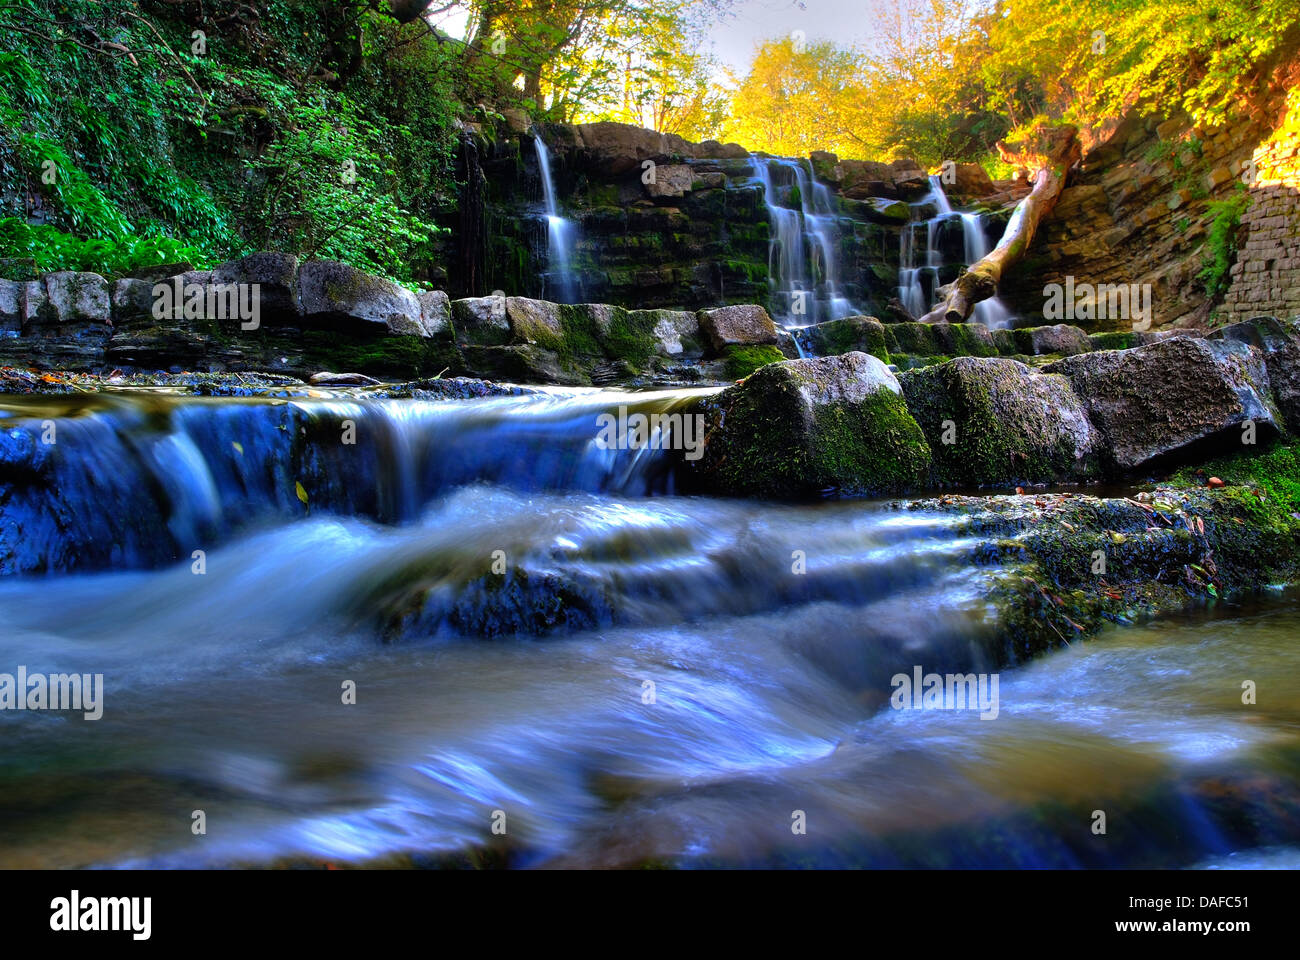 Scenic Waterfall in the British Countryside Stock Photo